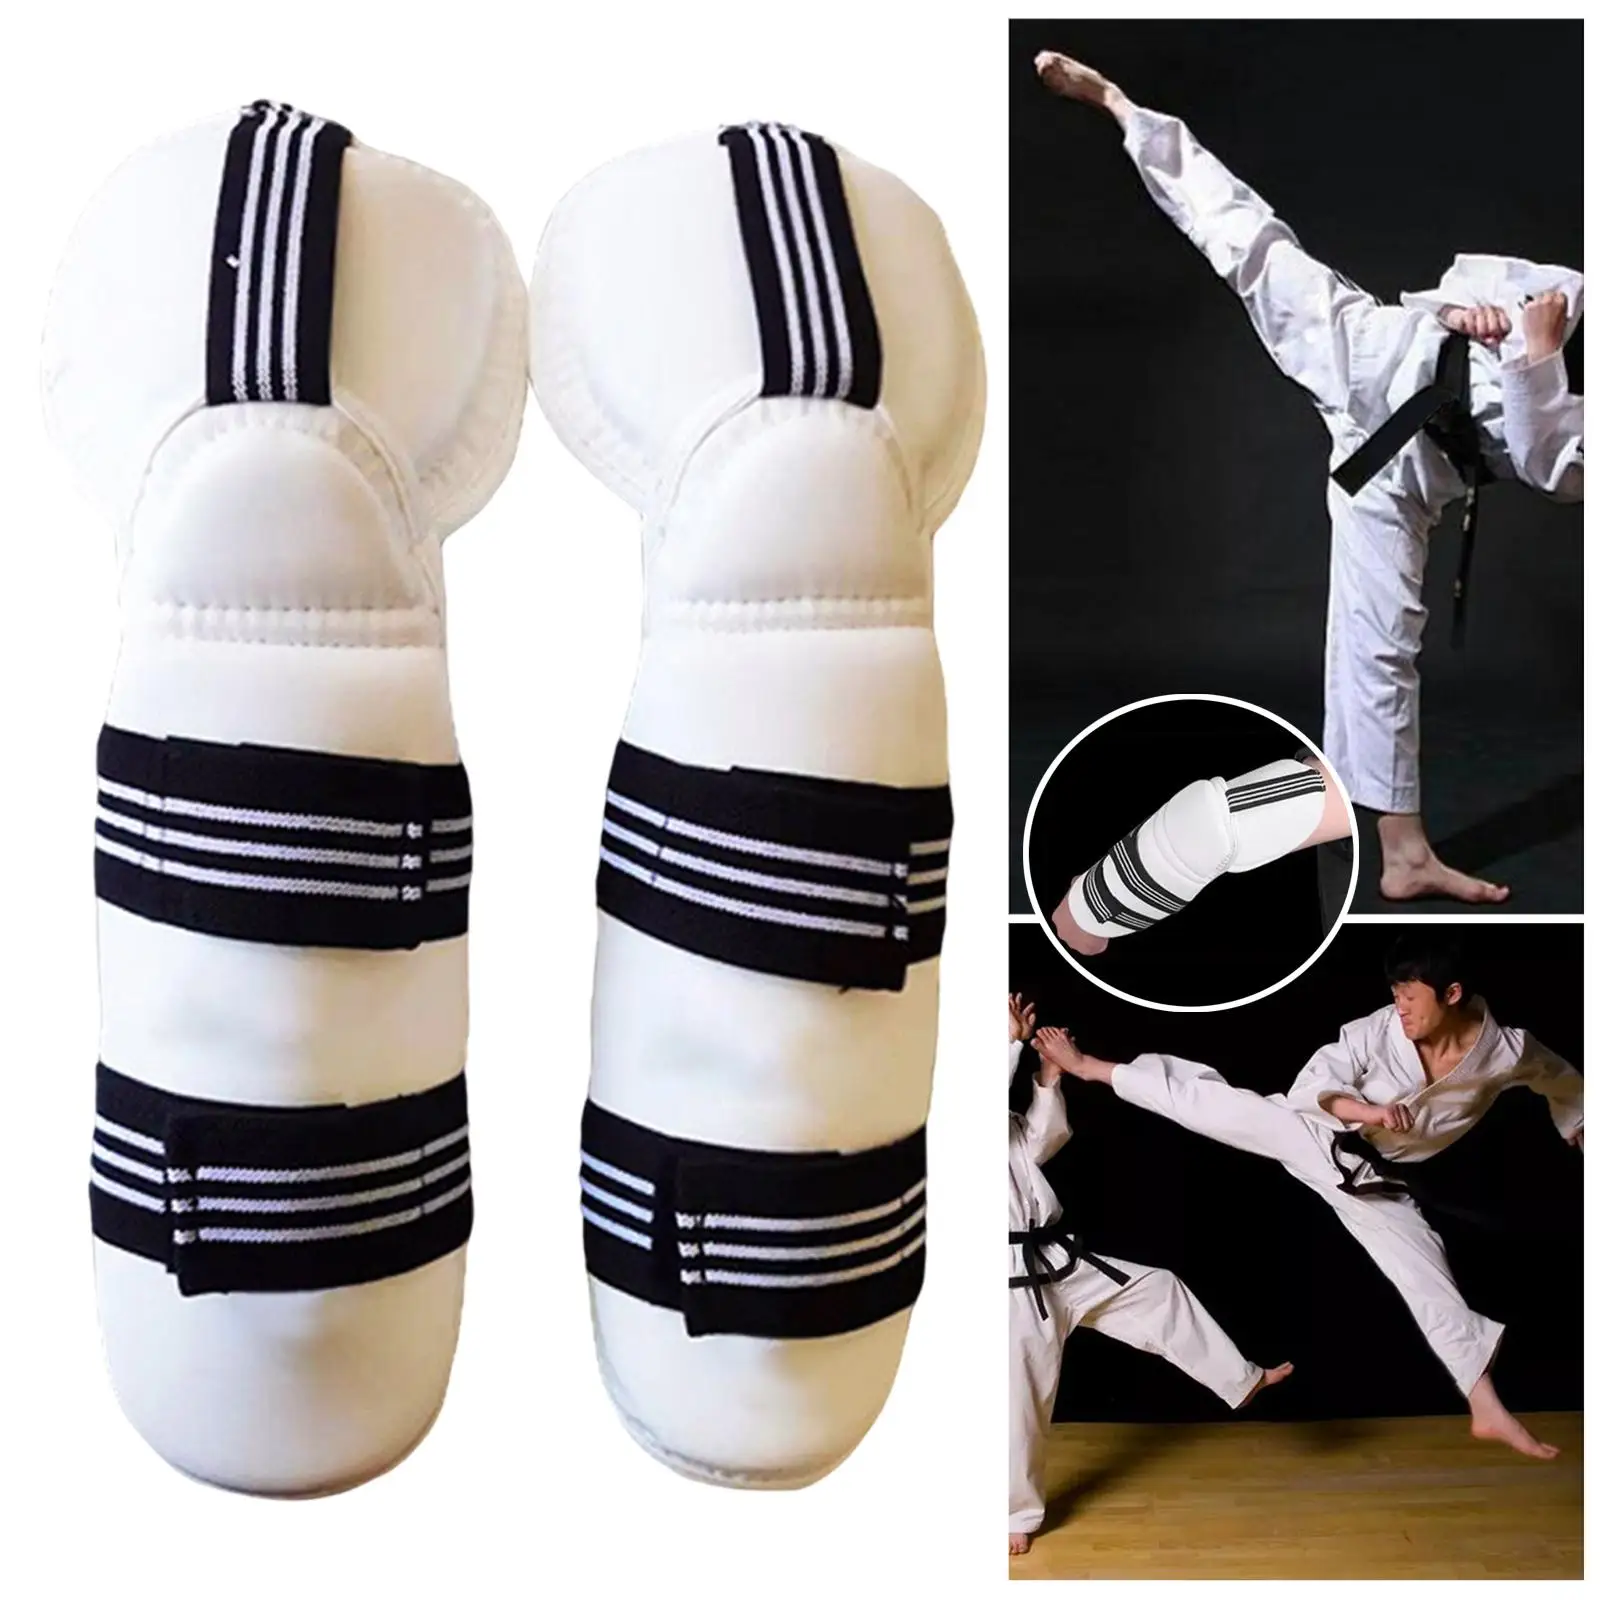 Protective Gear Taekwondo Guard Lightweight Elastic Strap Padded Guard Protection for Training Martial Arts Kickboxing Karate